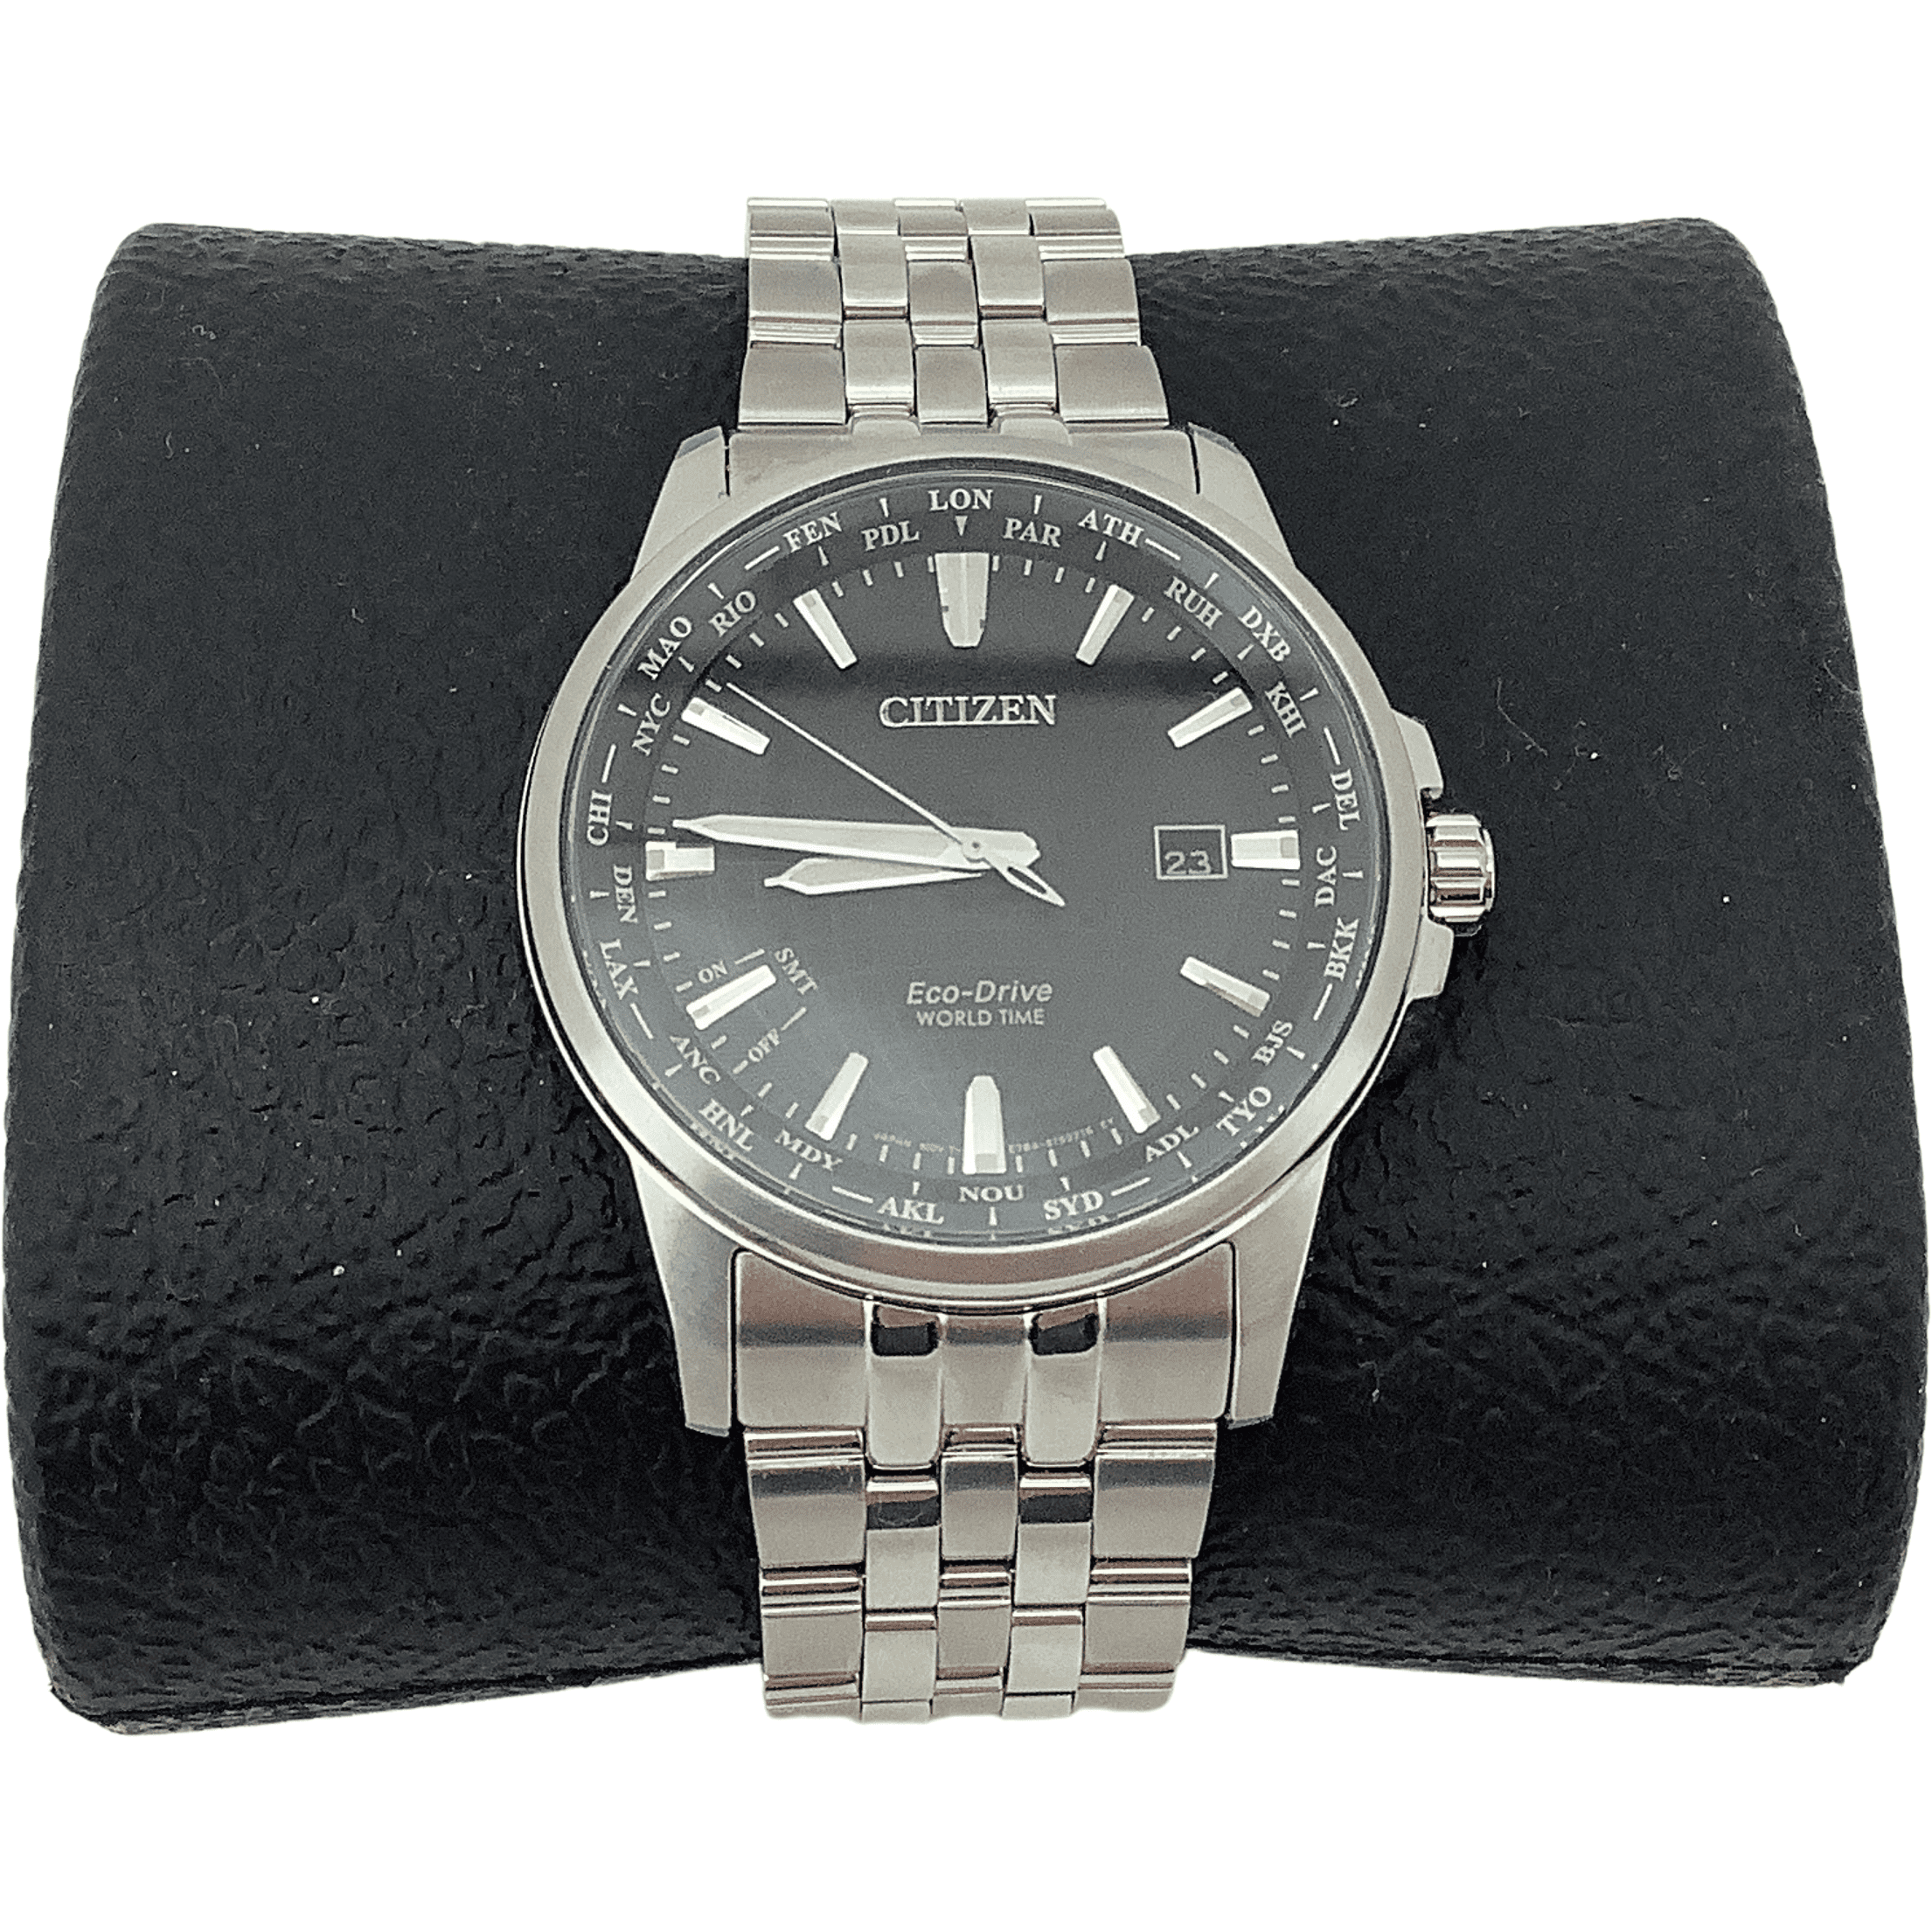 Citizen Men's Analog Wrist Watch / Black and Silver / Stainless Steel / Men's Accessories